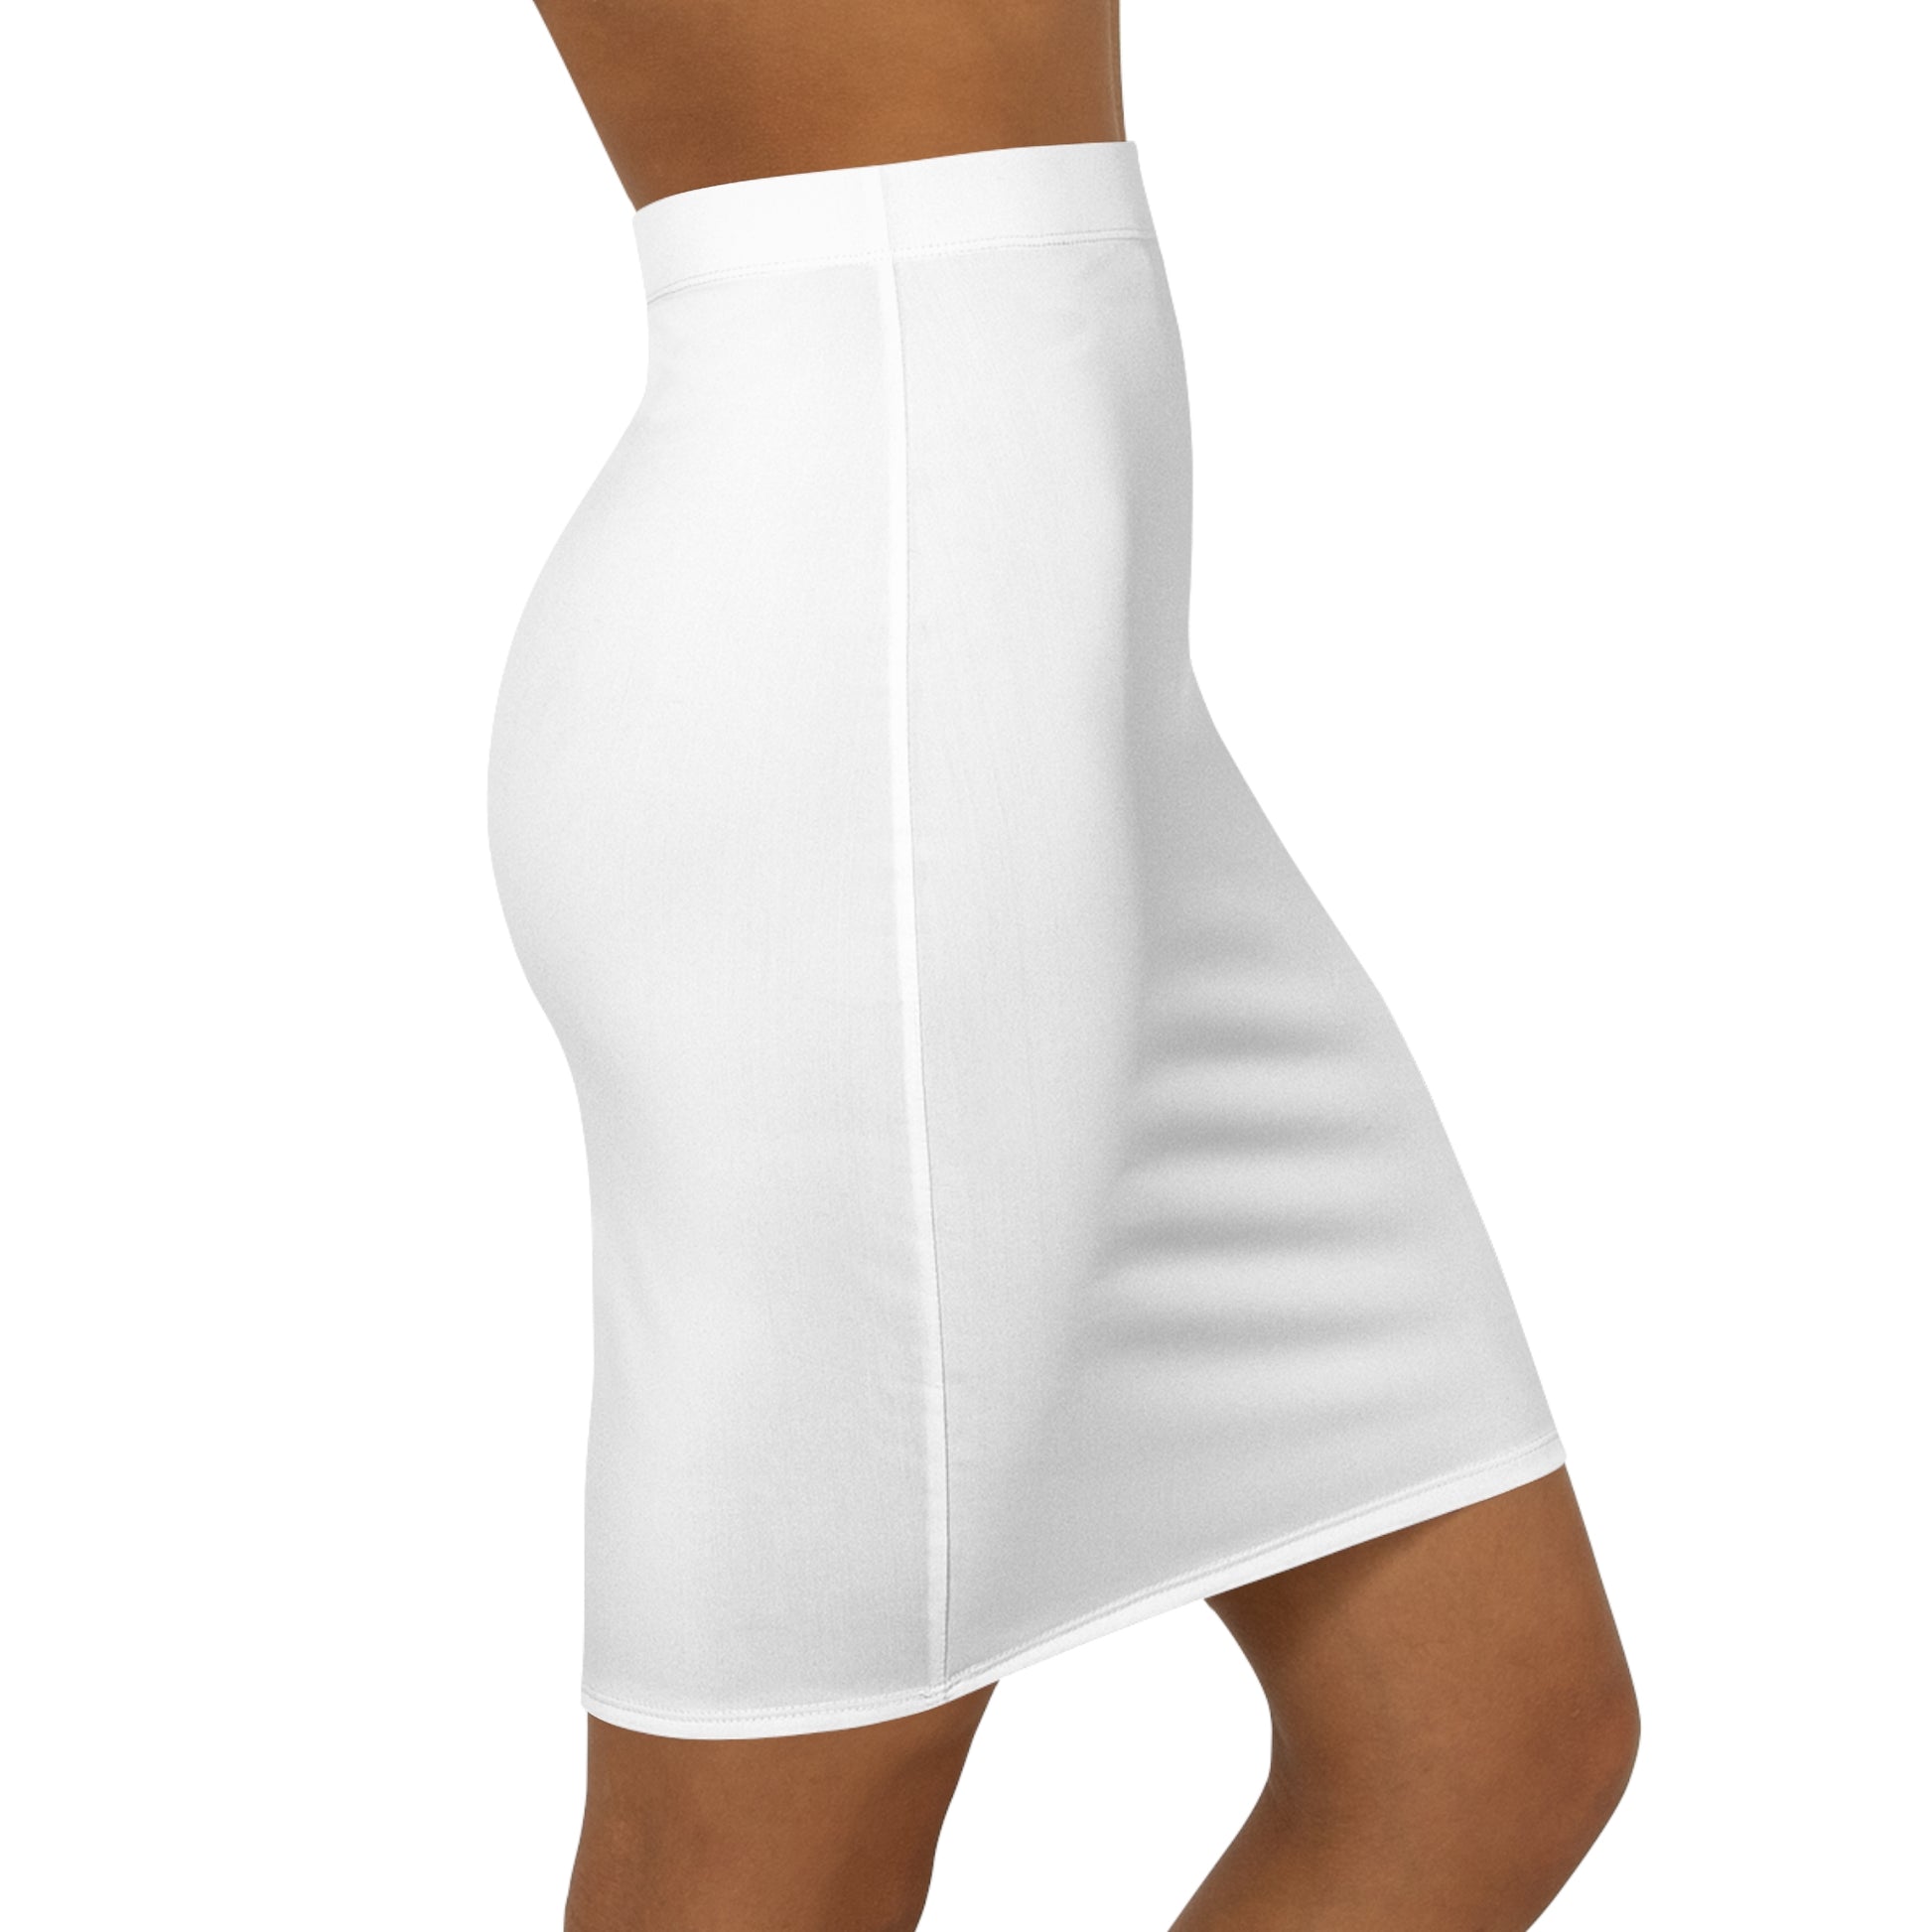 a woman wearing a white skirt